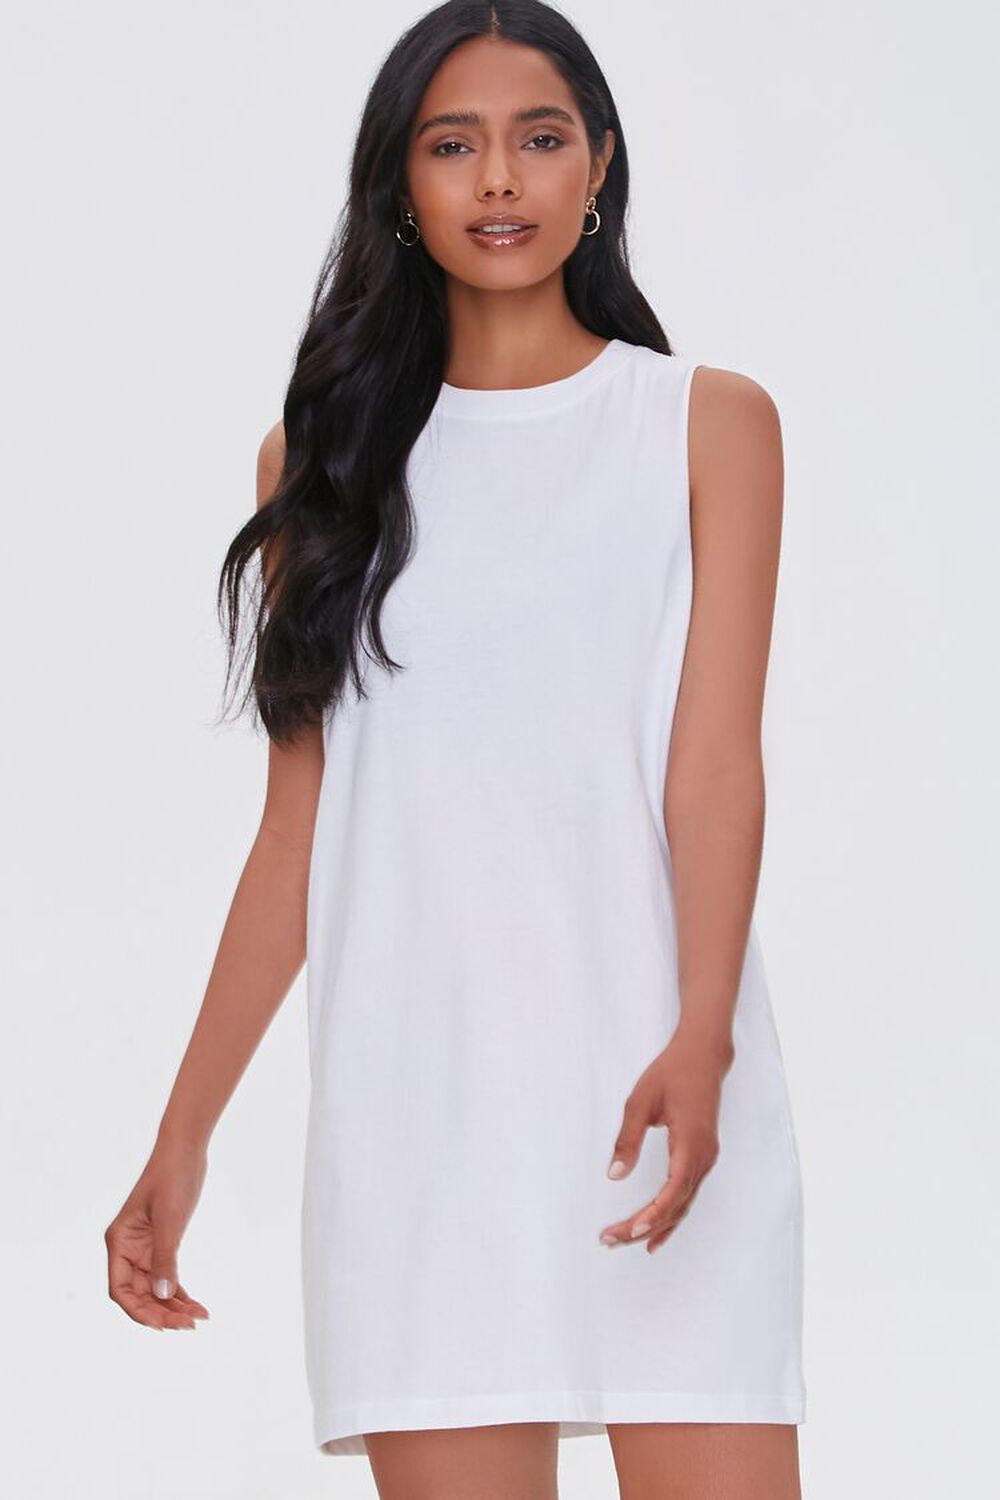 WHITE Muscle Tee Mini Dress, image 1